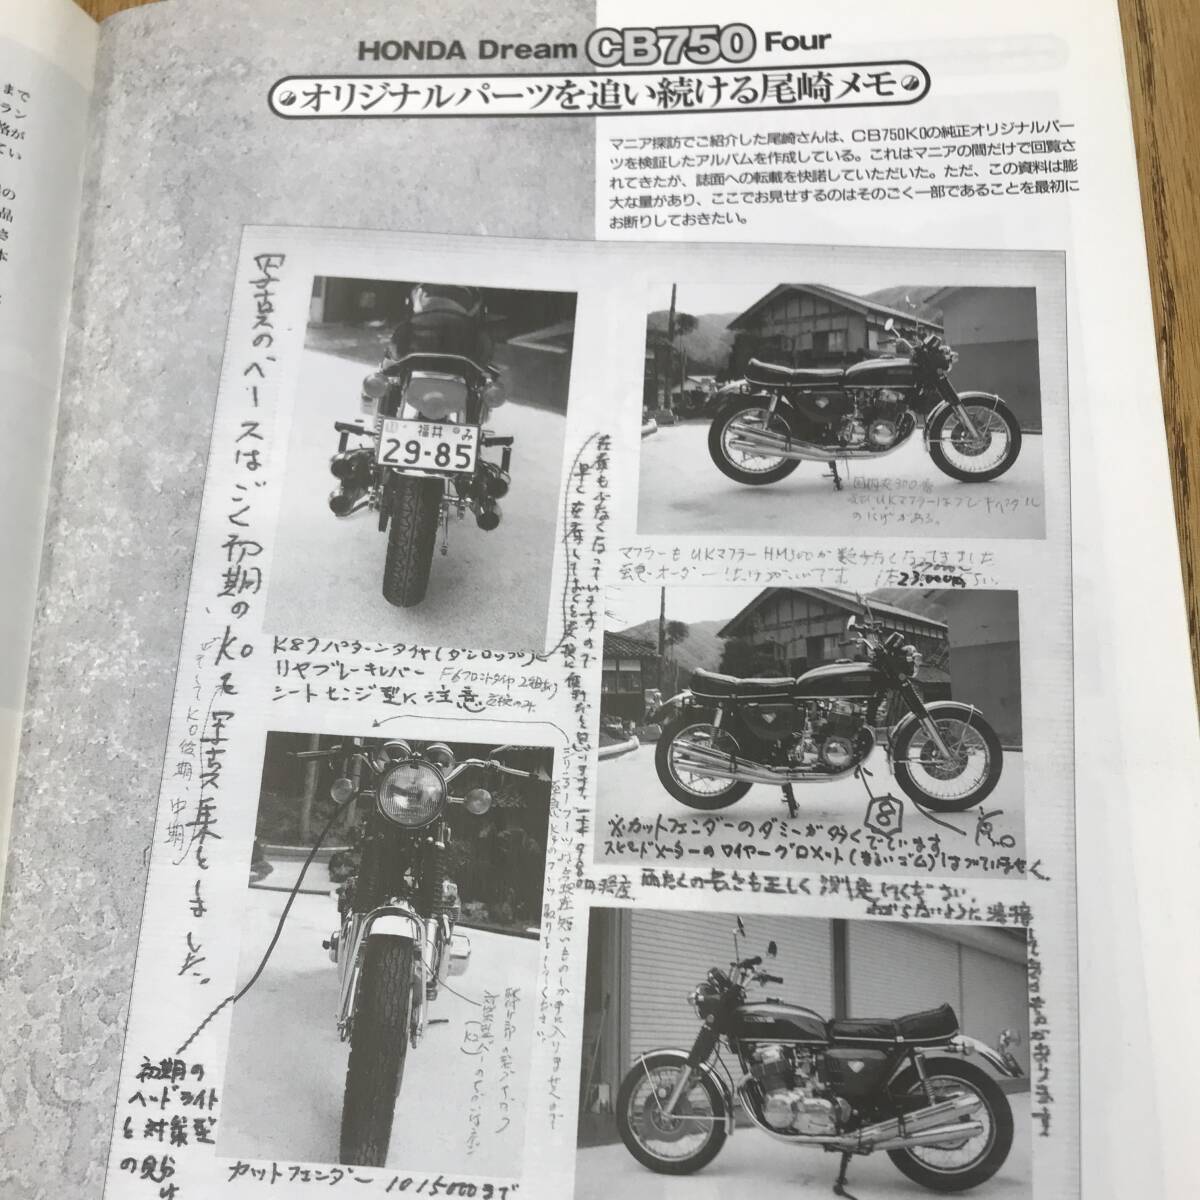  Honda Dream CB750Four hand book separate volume Motorcyclist appendix 